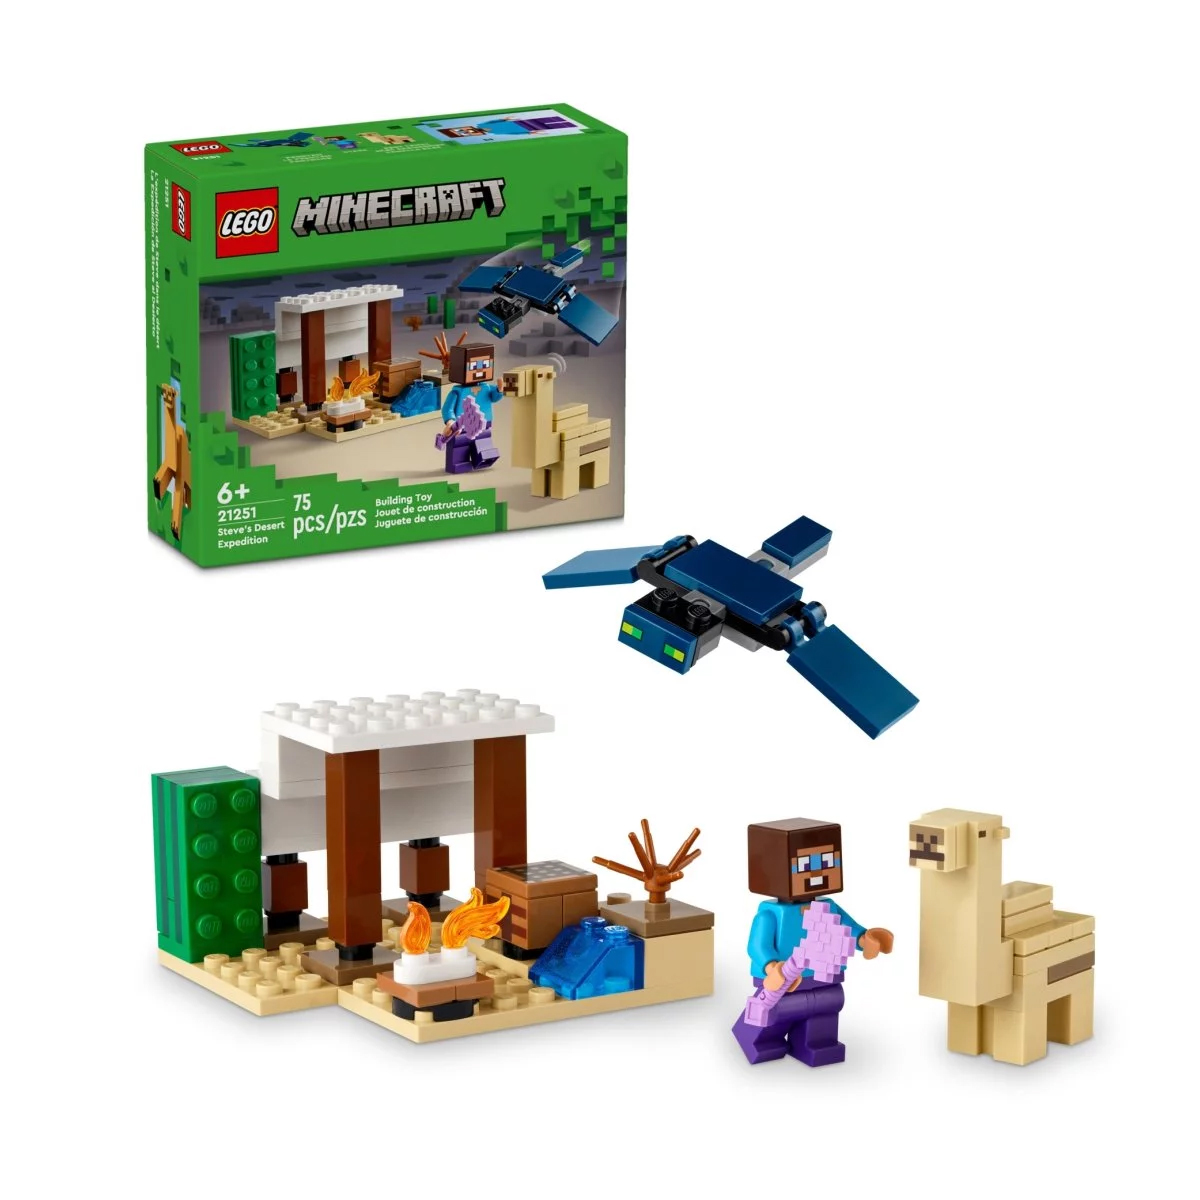 Конструктор Lego Minecraft Steve's Desert Expedition 21251, 75 деталей конструктор lego minecraft 21256 дом лягушки